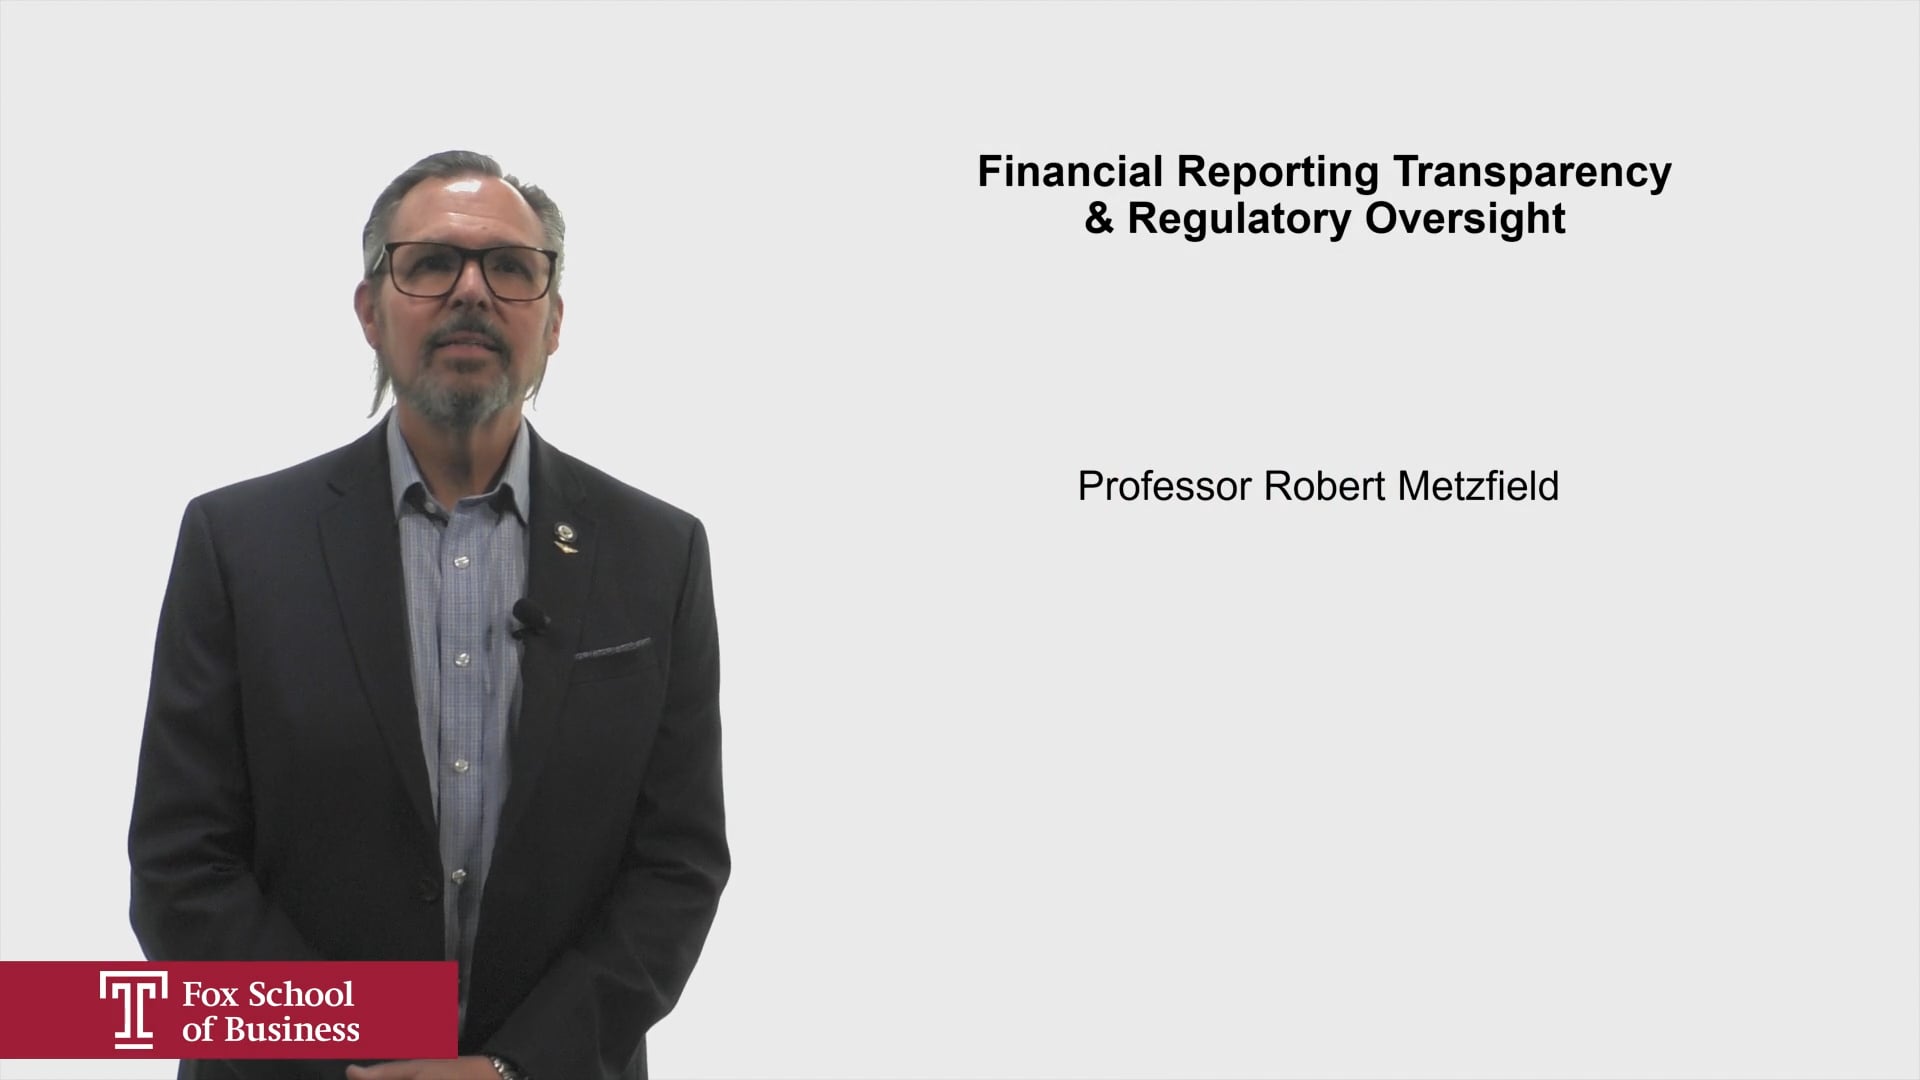 Financial Reporting Transparency & Regulatory Oversight